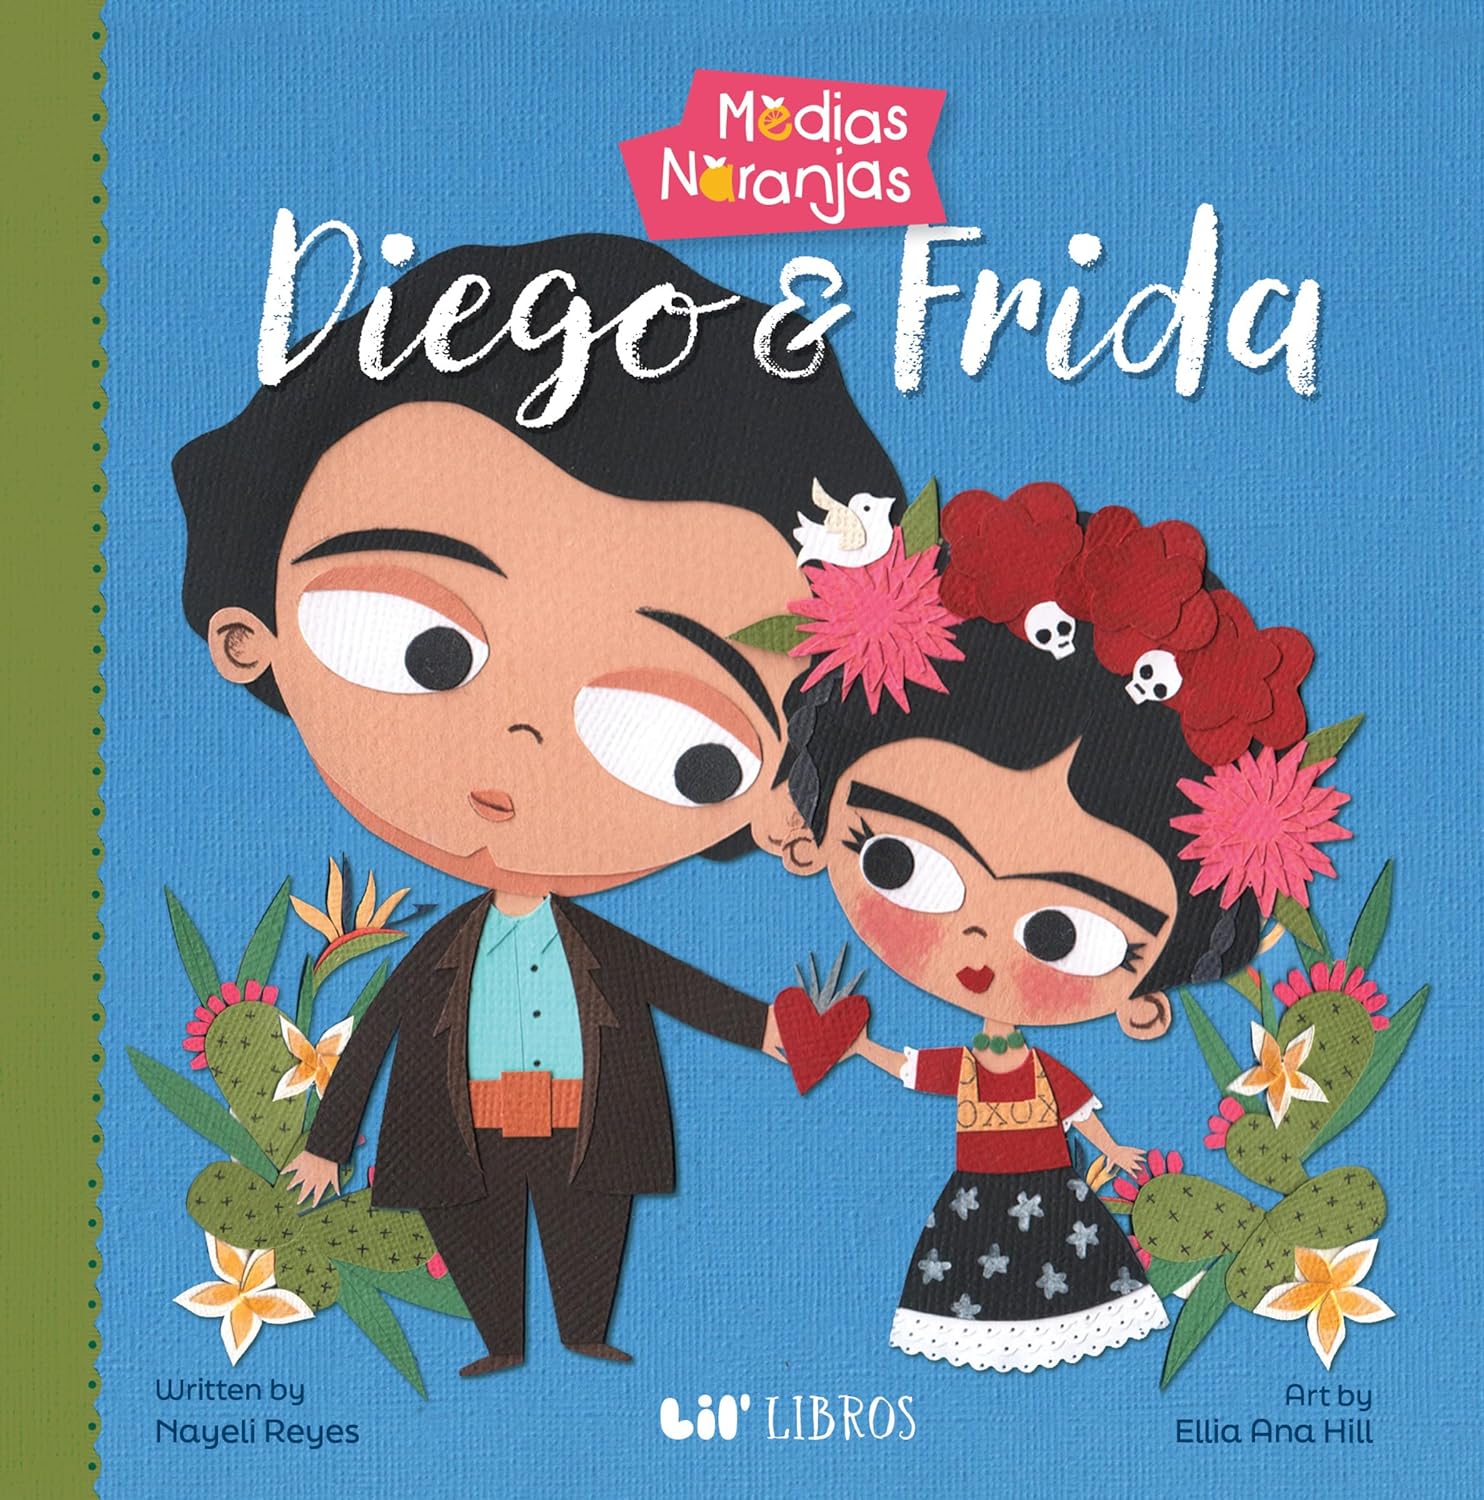 Medias Naranjas: Diego & Frida